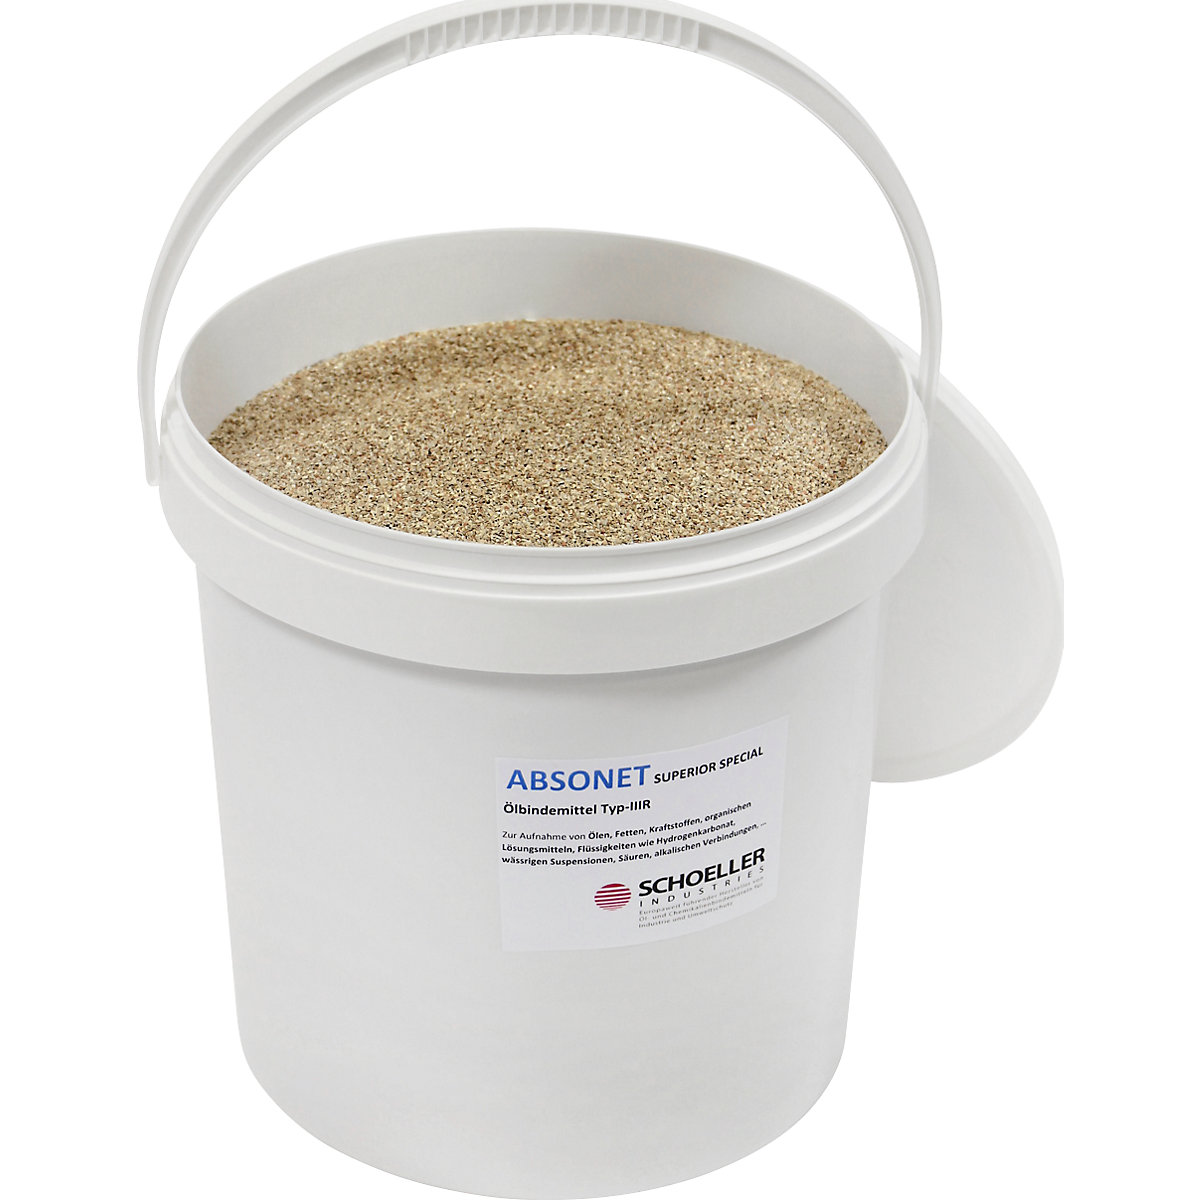 Universal absorbent granulate type III R fine grain